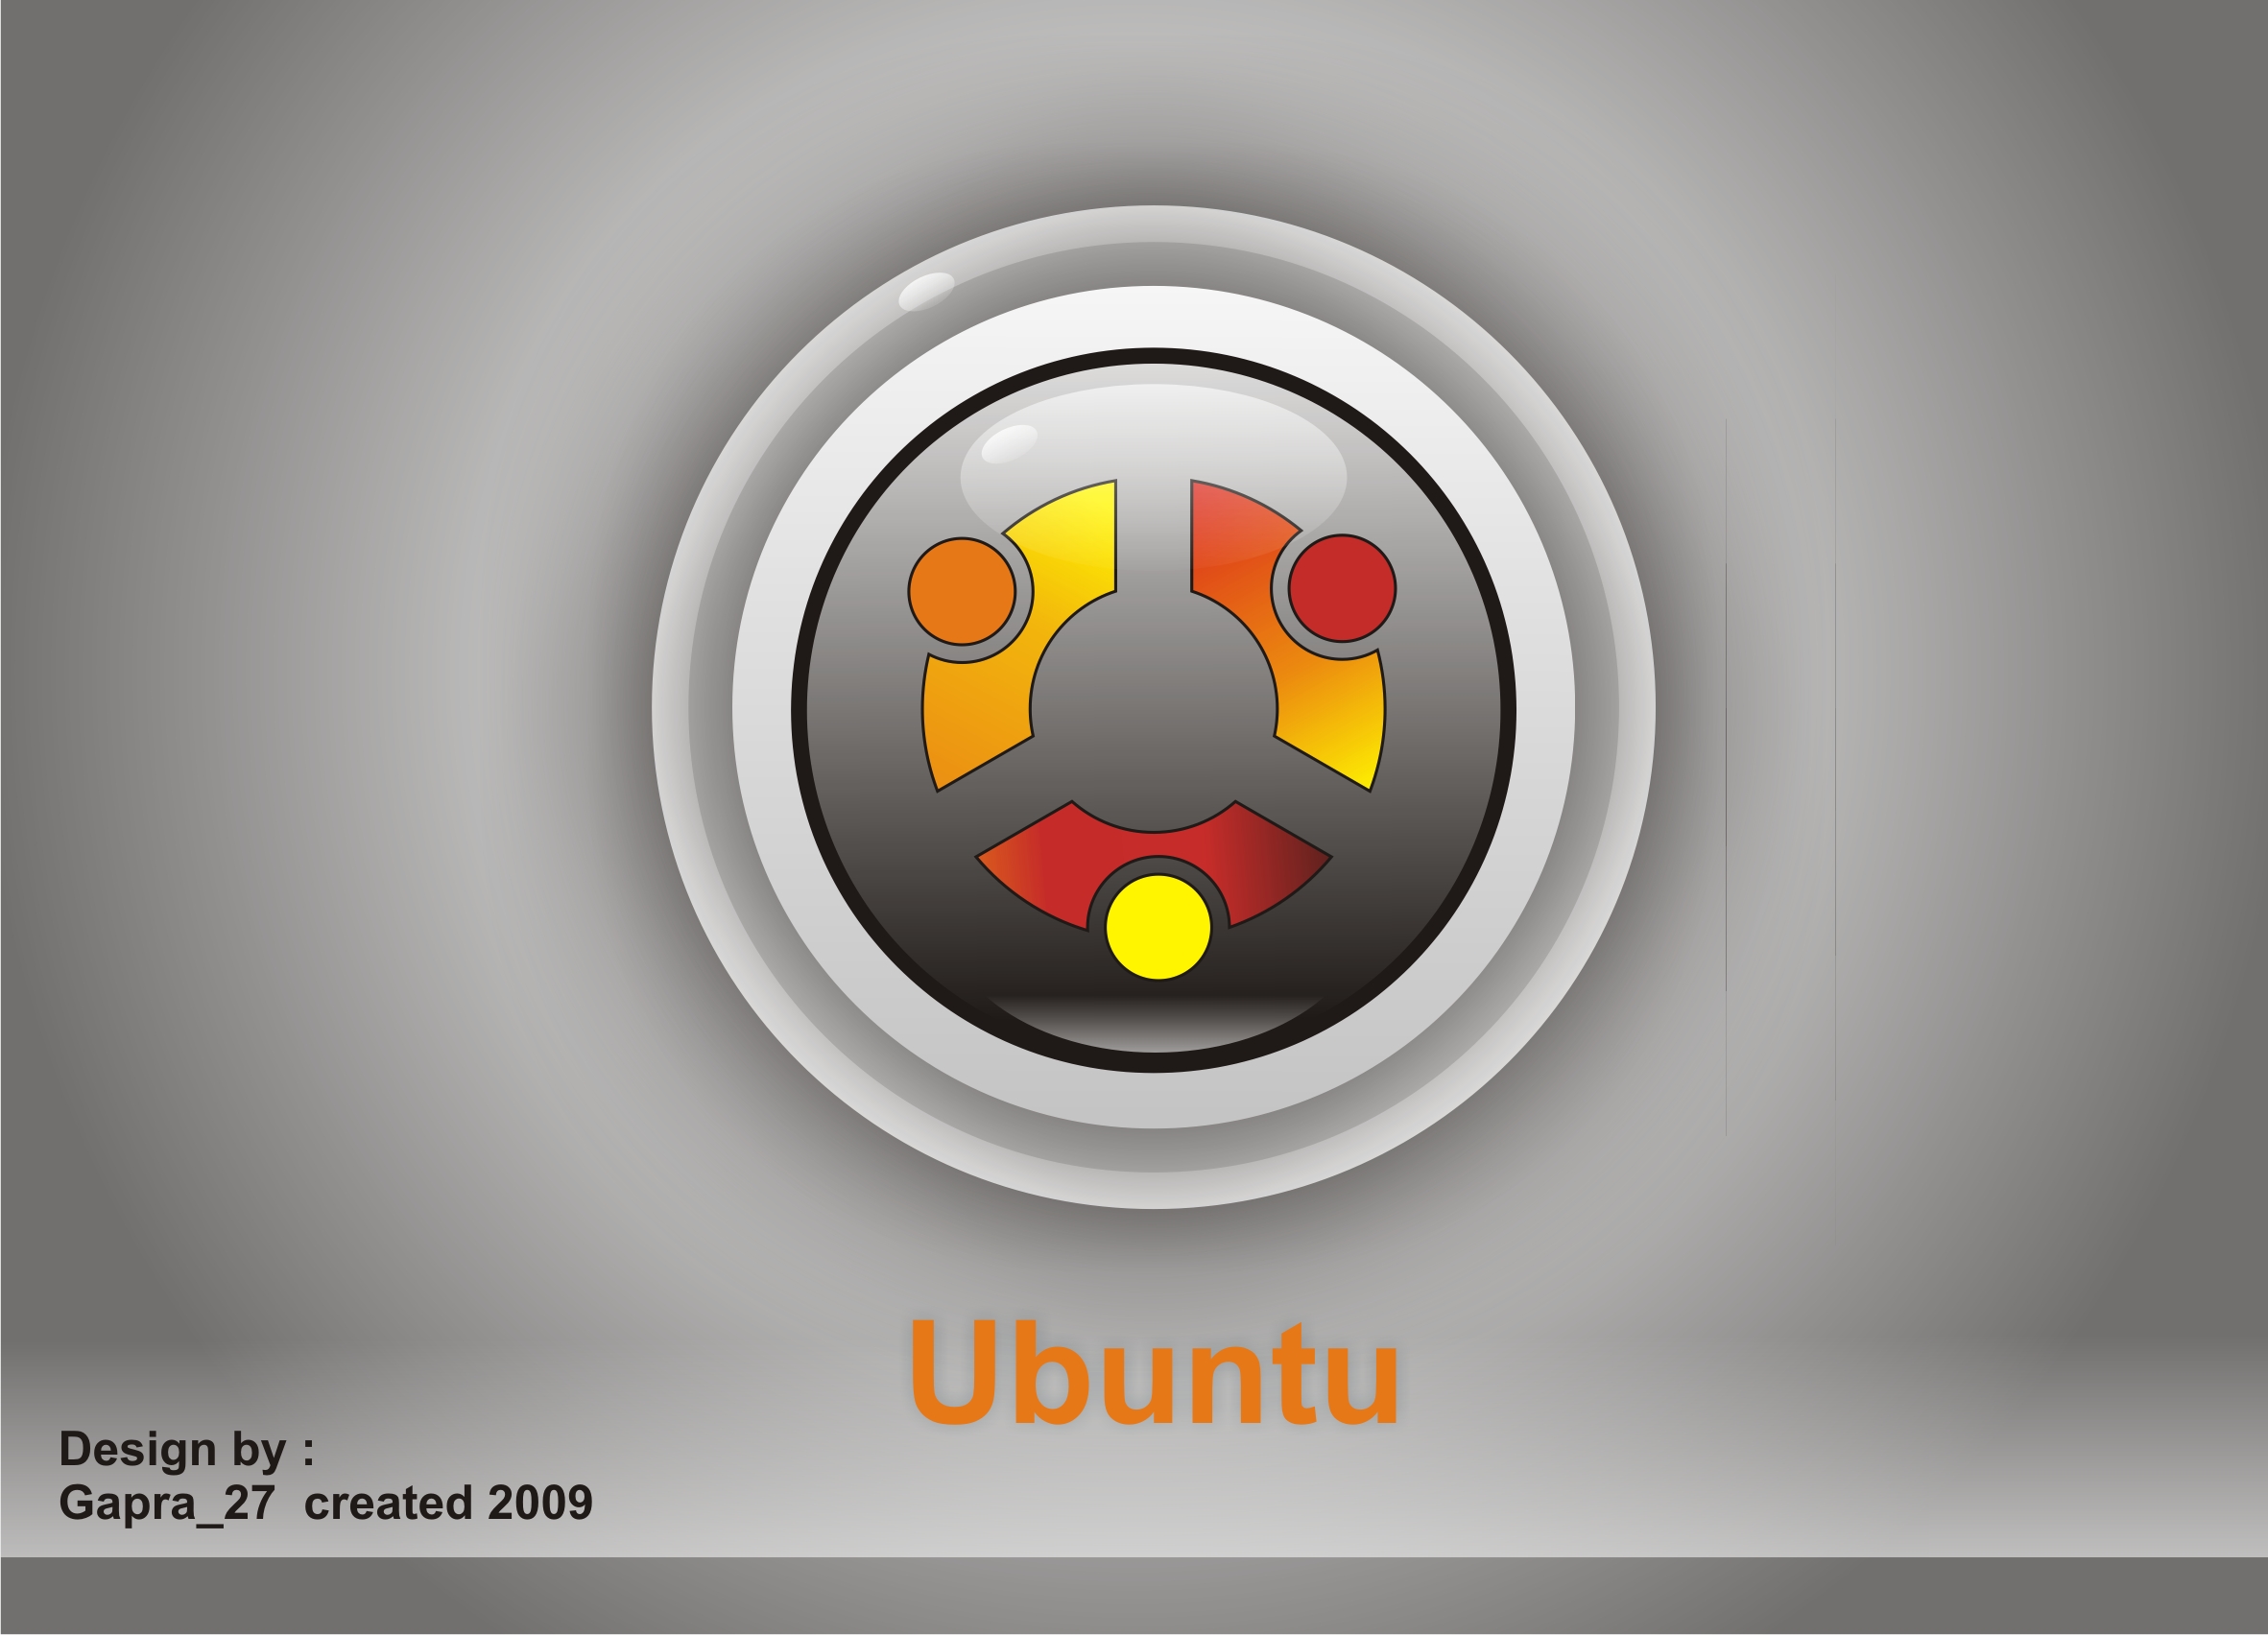 5.1. Membuat Desain Logo Ubuntu Anda pernah mengenal logo ubuntu atau tidak? Nah disini akan membahas bagaimana cara membuat logo tersebut, dibawah ini adalah contoh logo Ubuntu : Gambar 5.